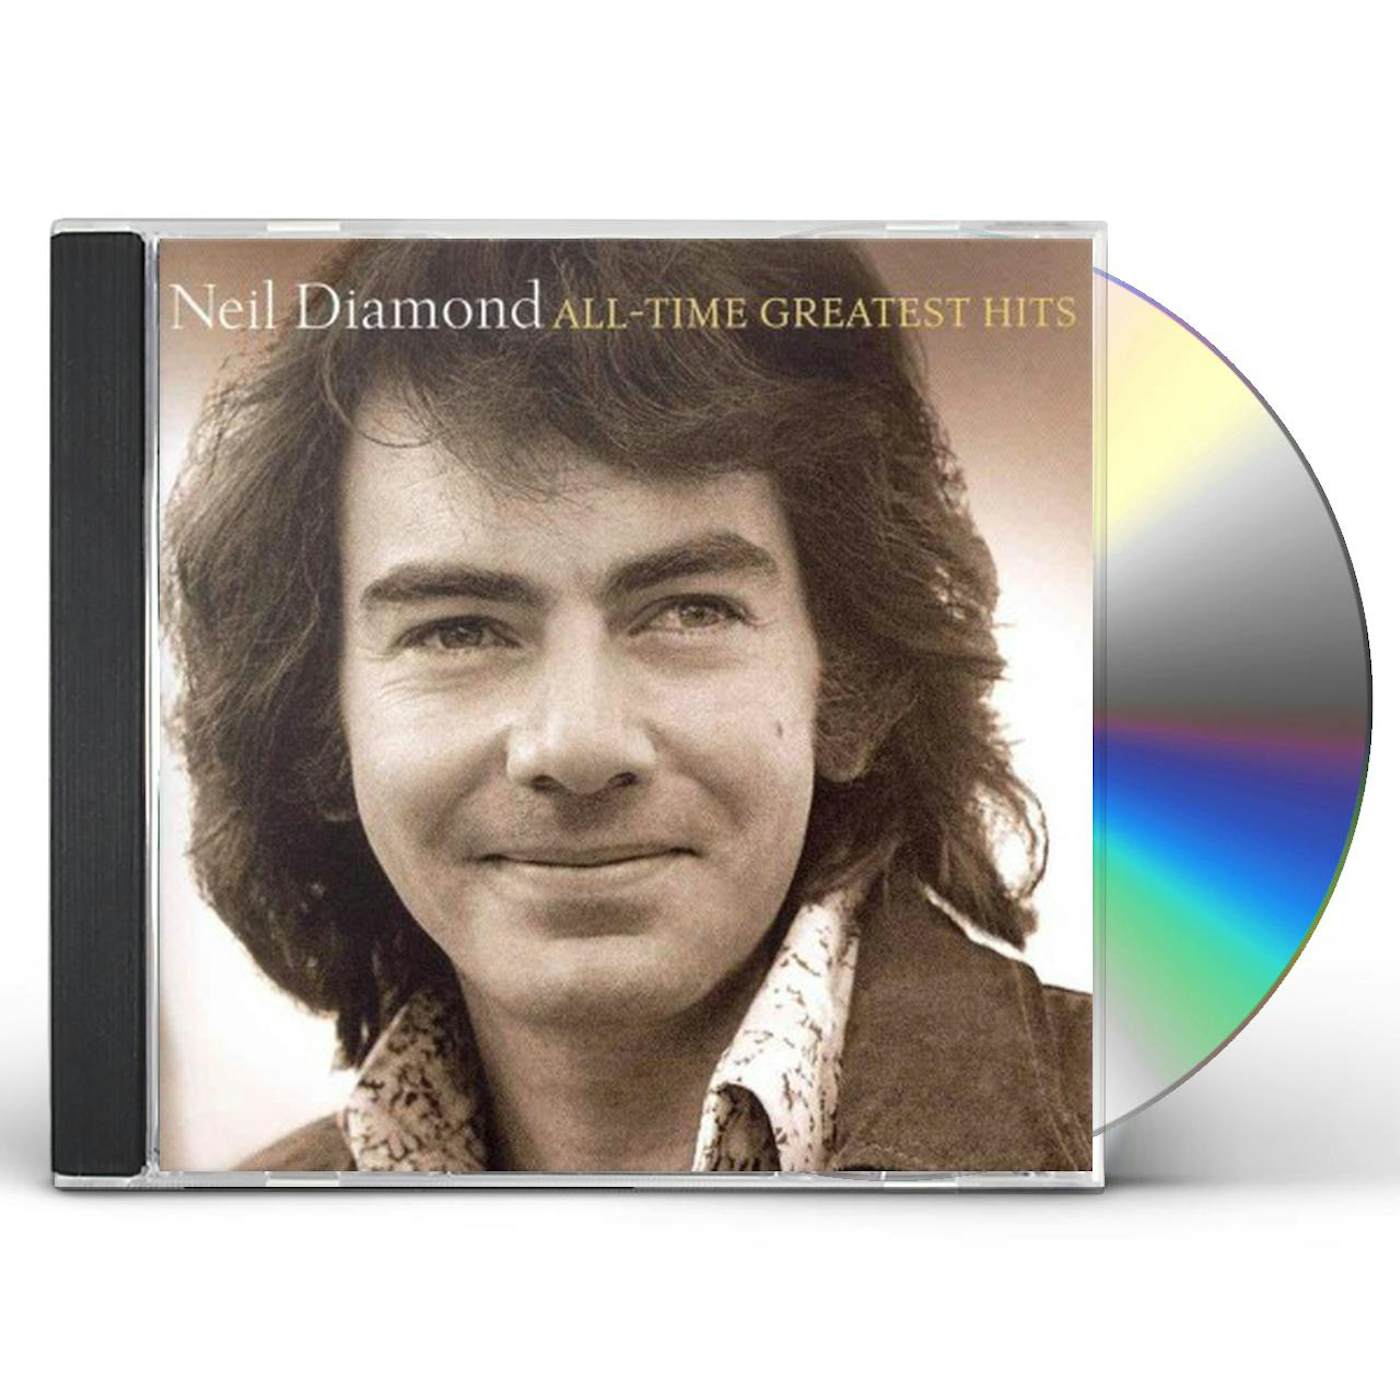 Neil Diamond ALL-TIME GREATEST HITS CD